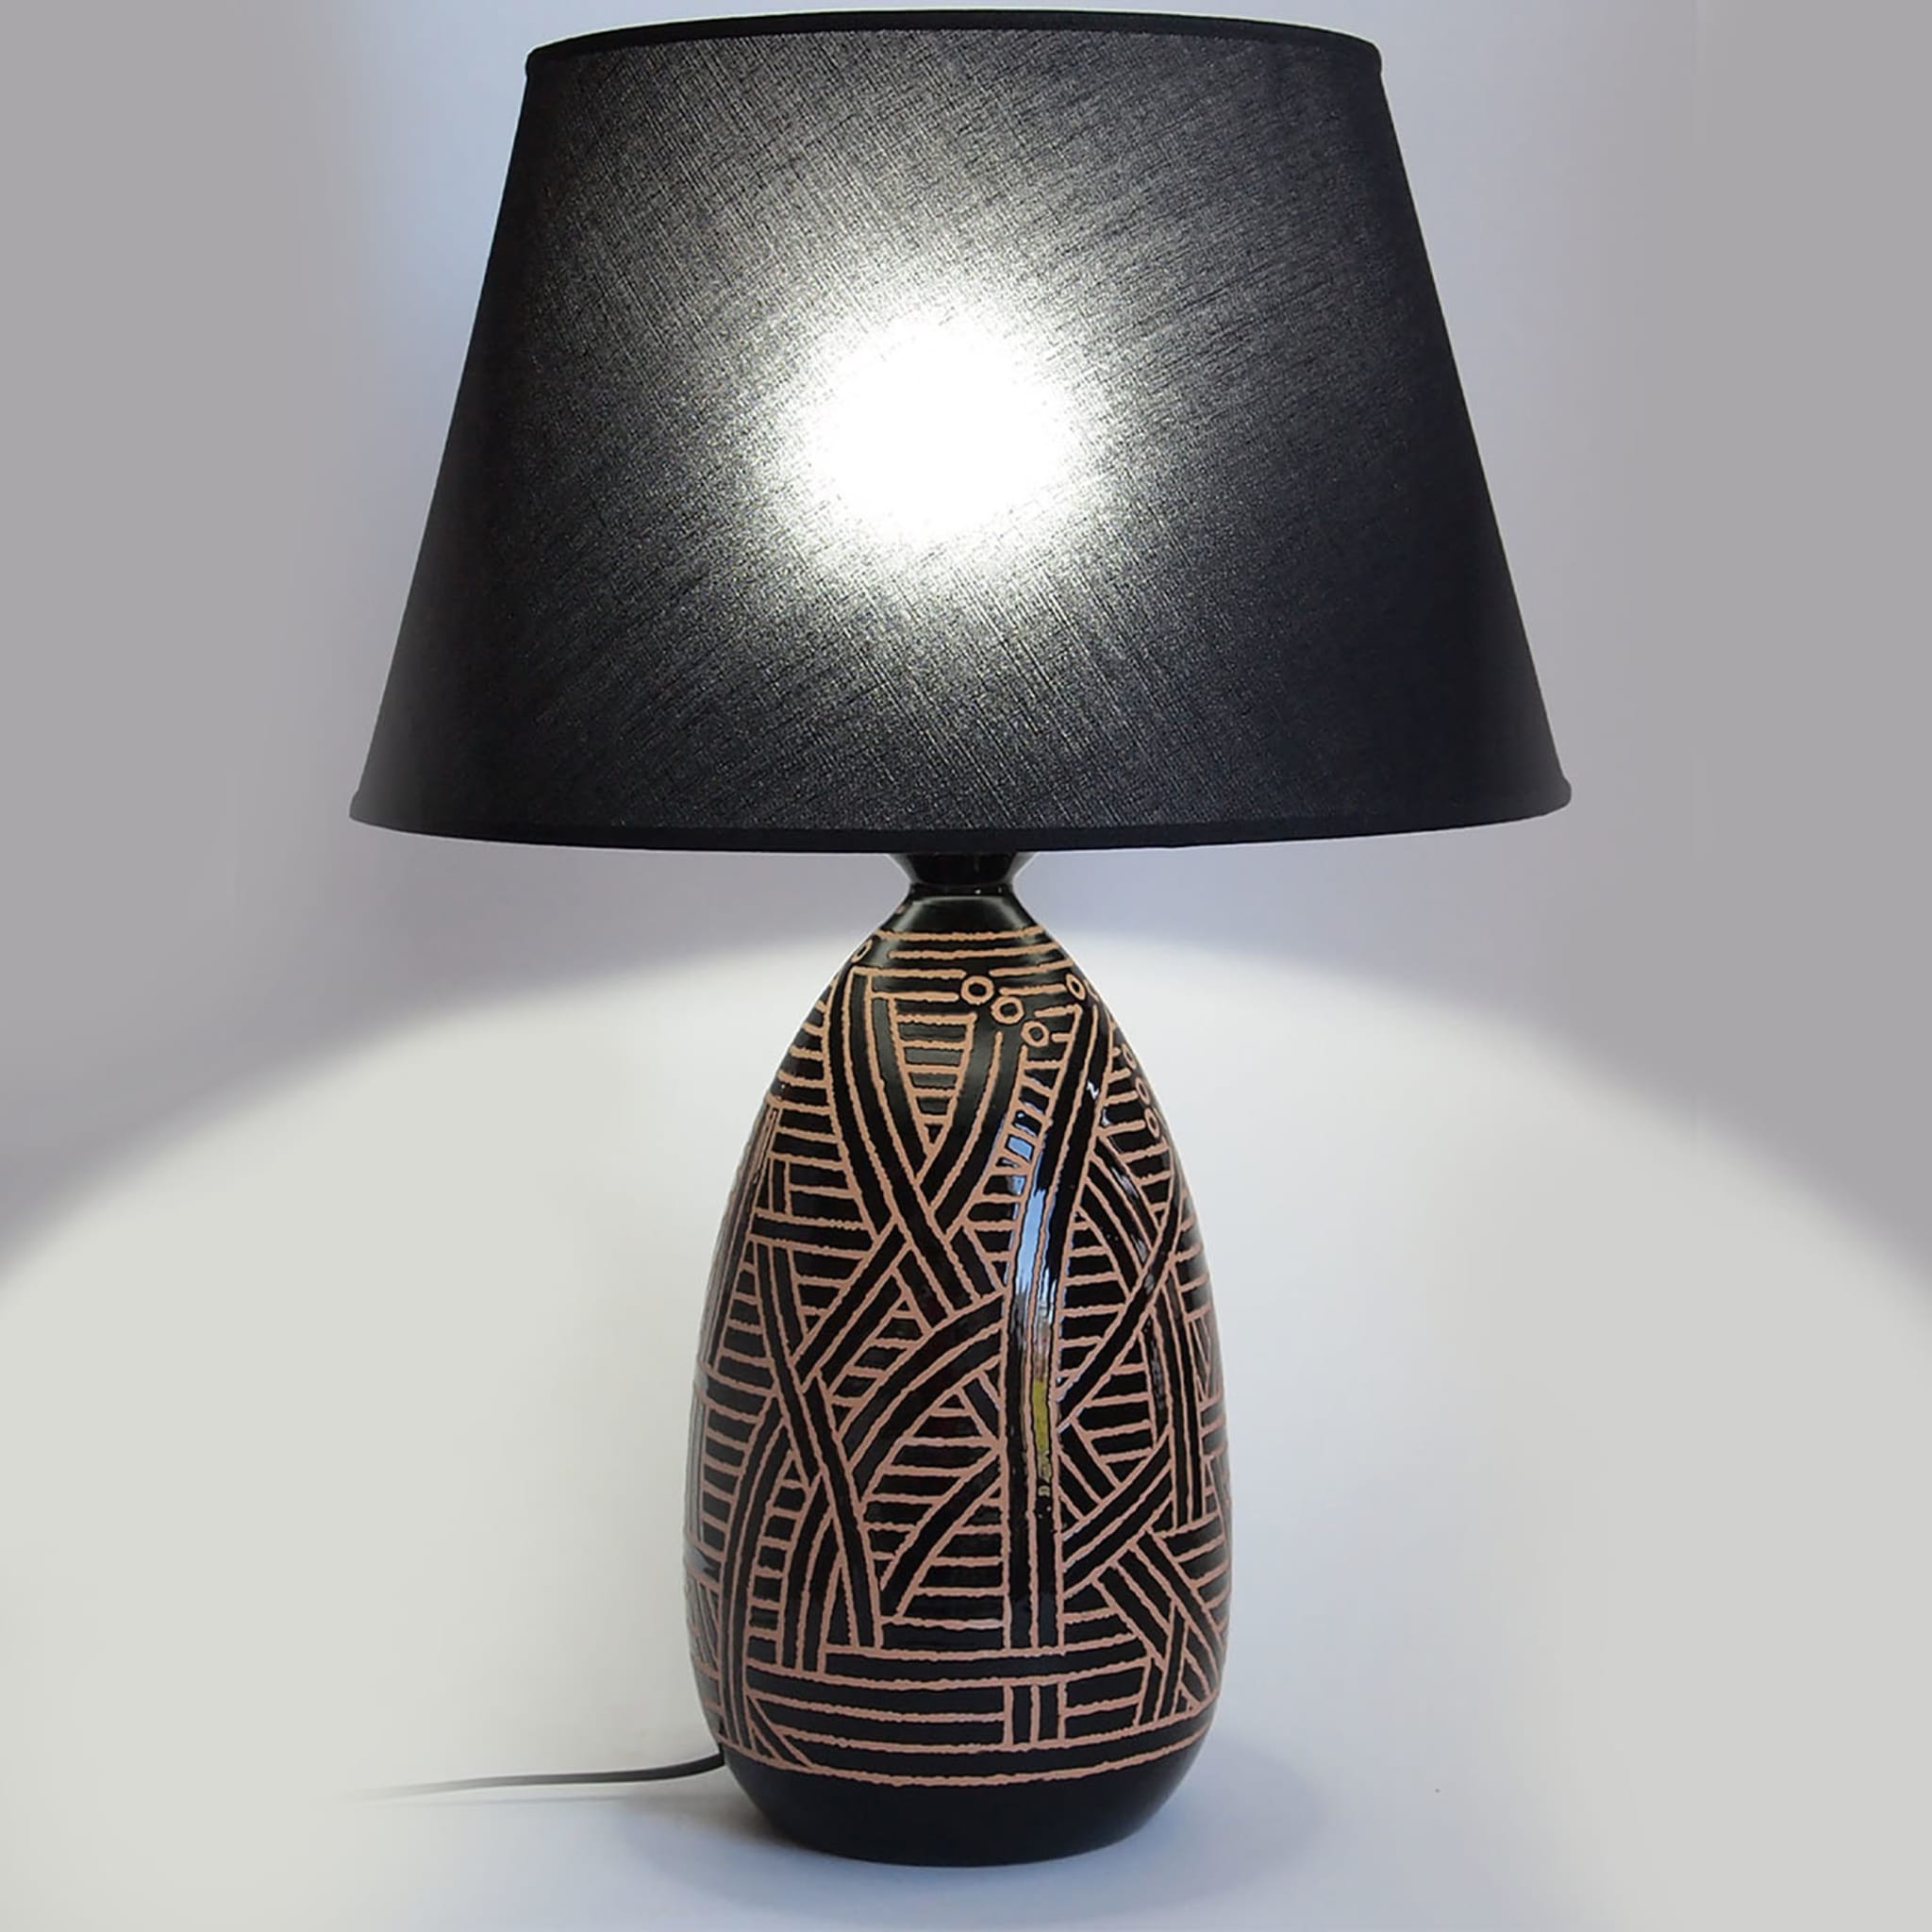 Patterned Black & Terracotta Table Lamp - Alternative view 3